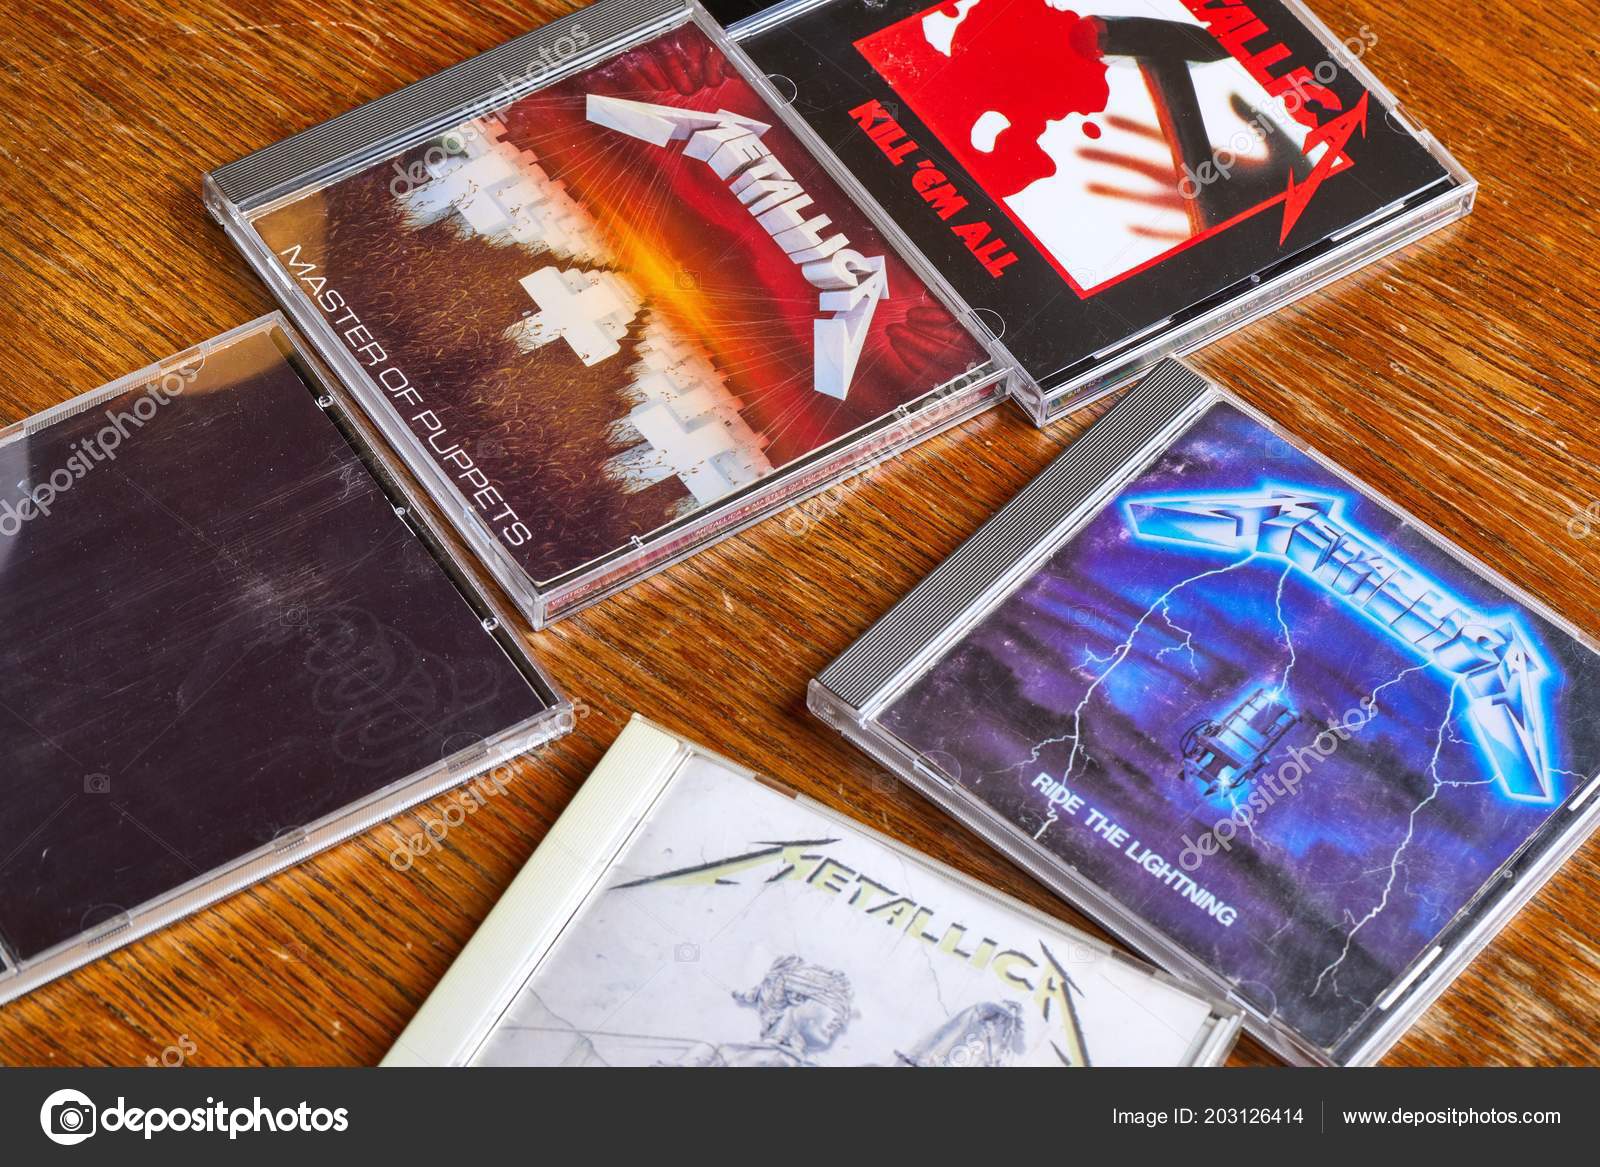 Metallica Master of Puppets CD — Foto editorial de stock © Gudella  #203126414